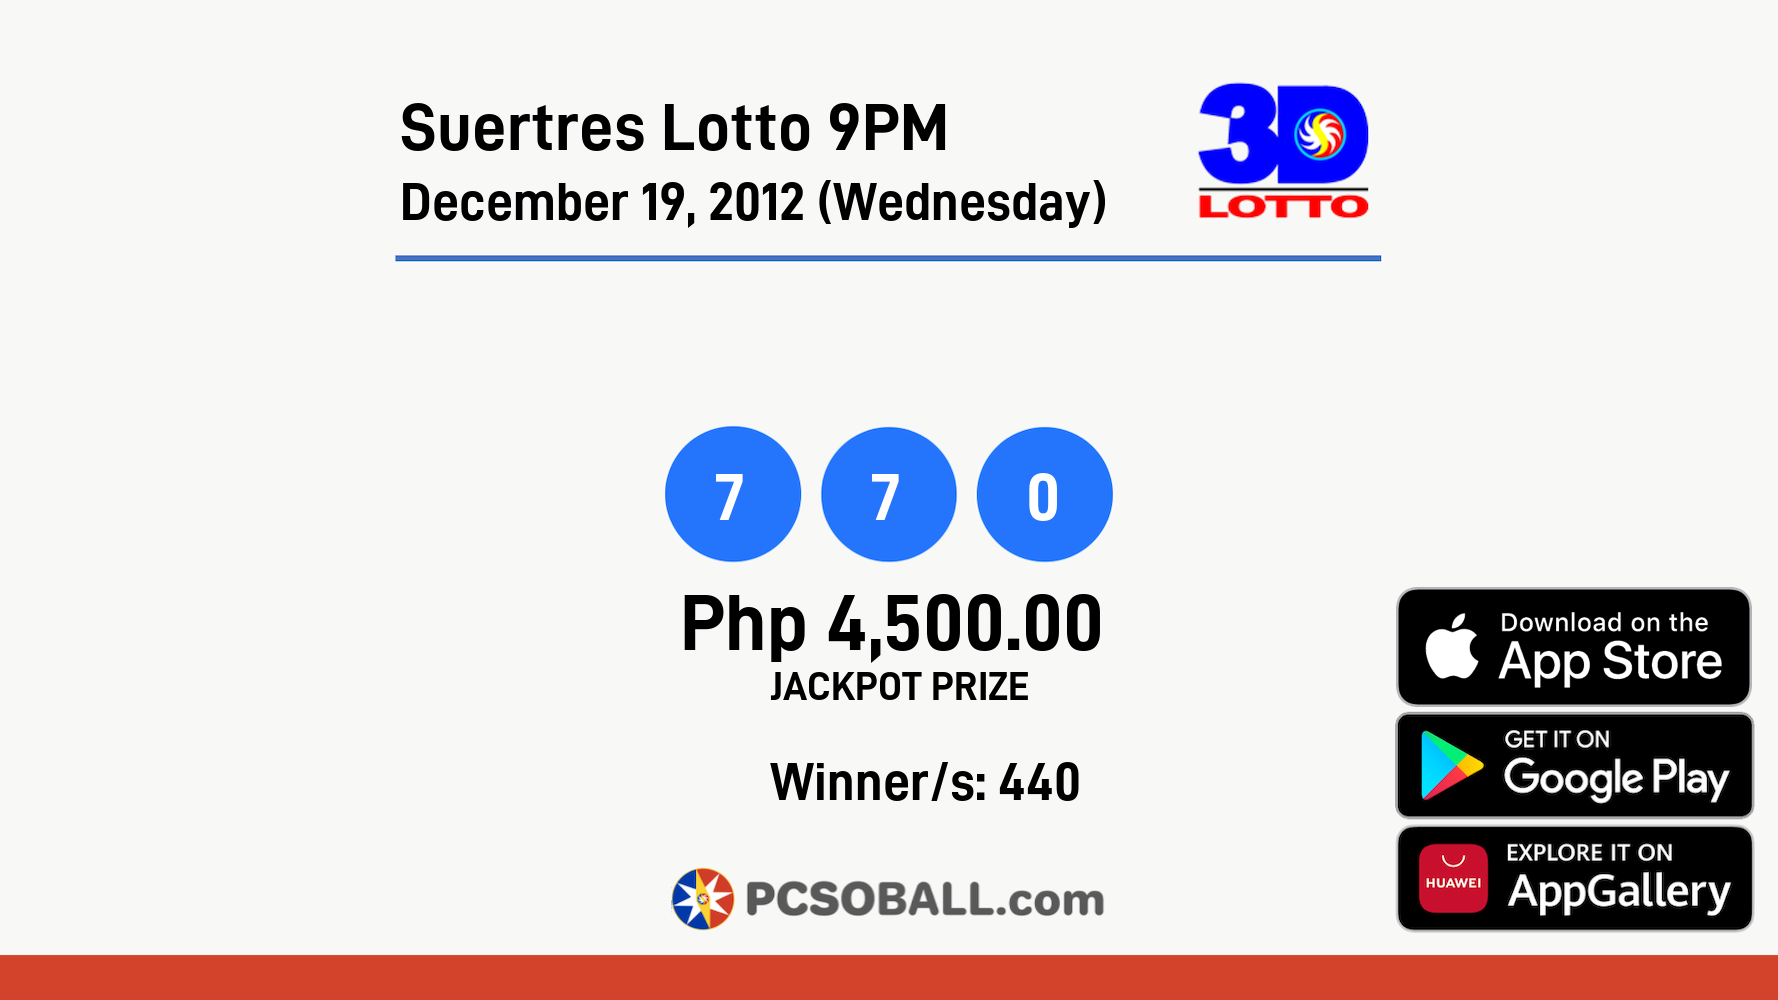 Suertres Lotto 9PM December 19, 2012 (Wednesday) Result